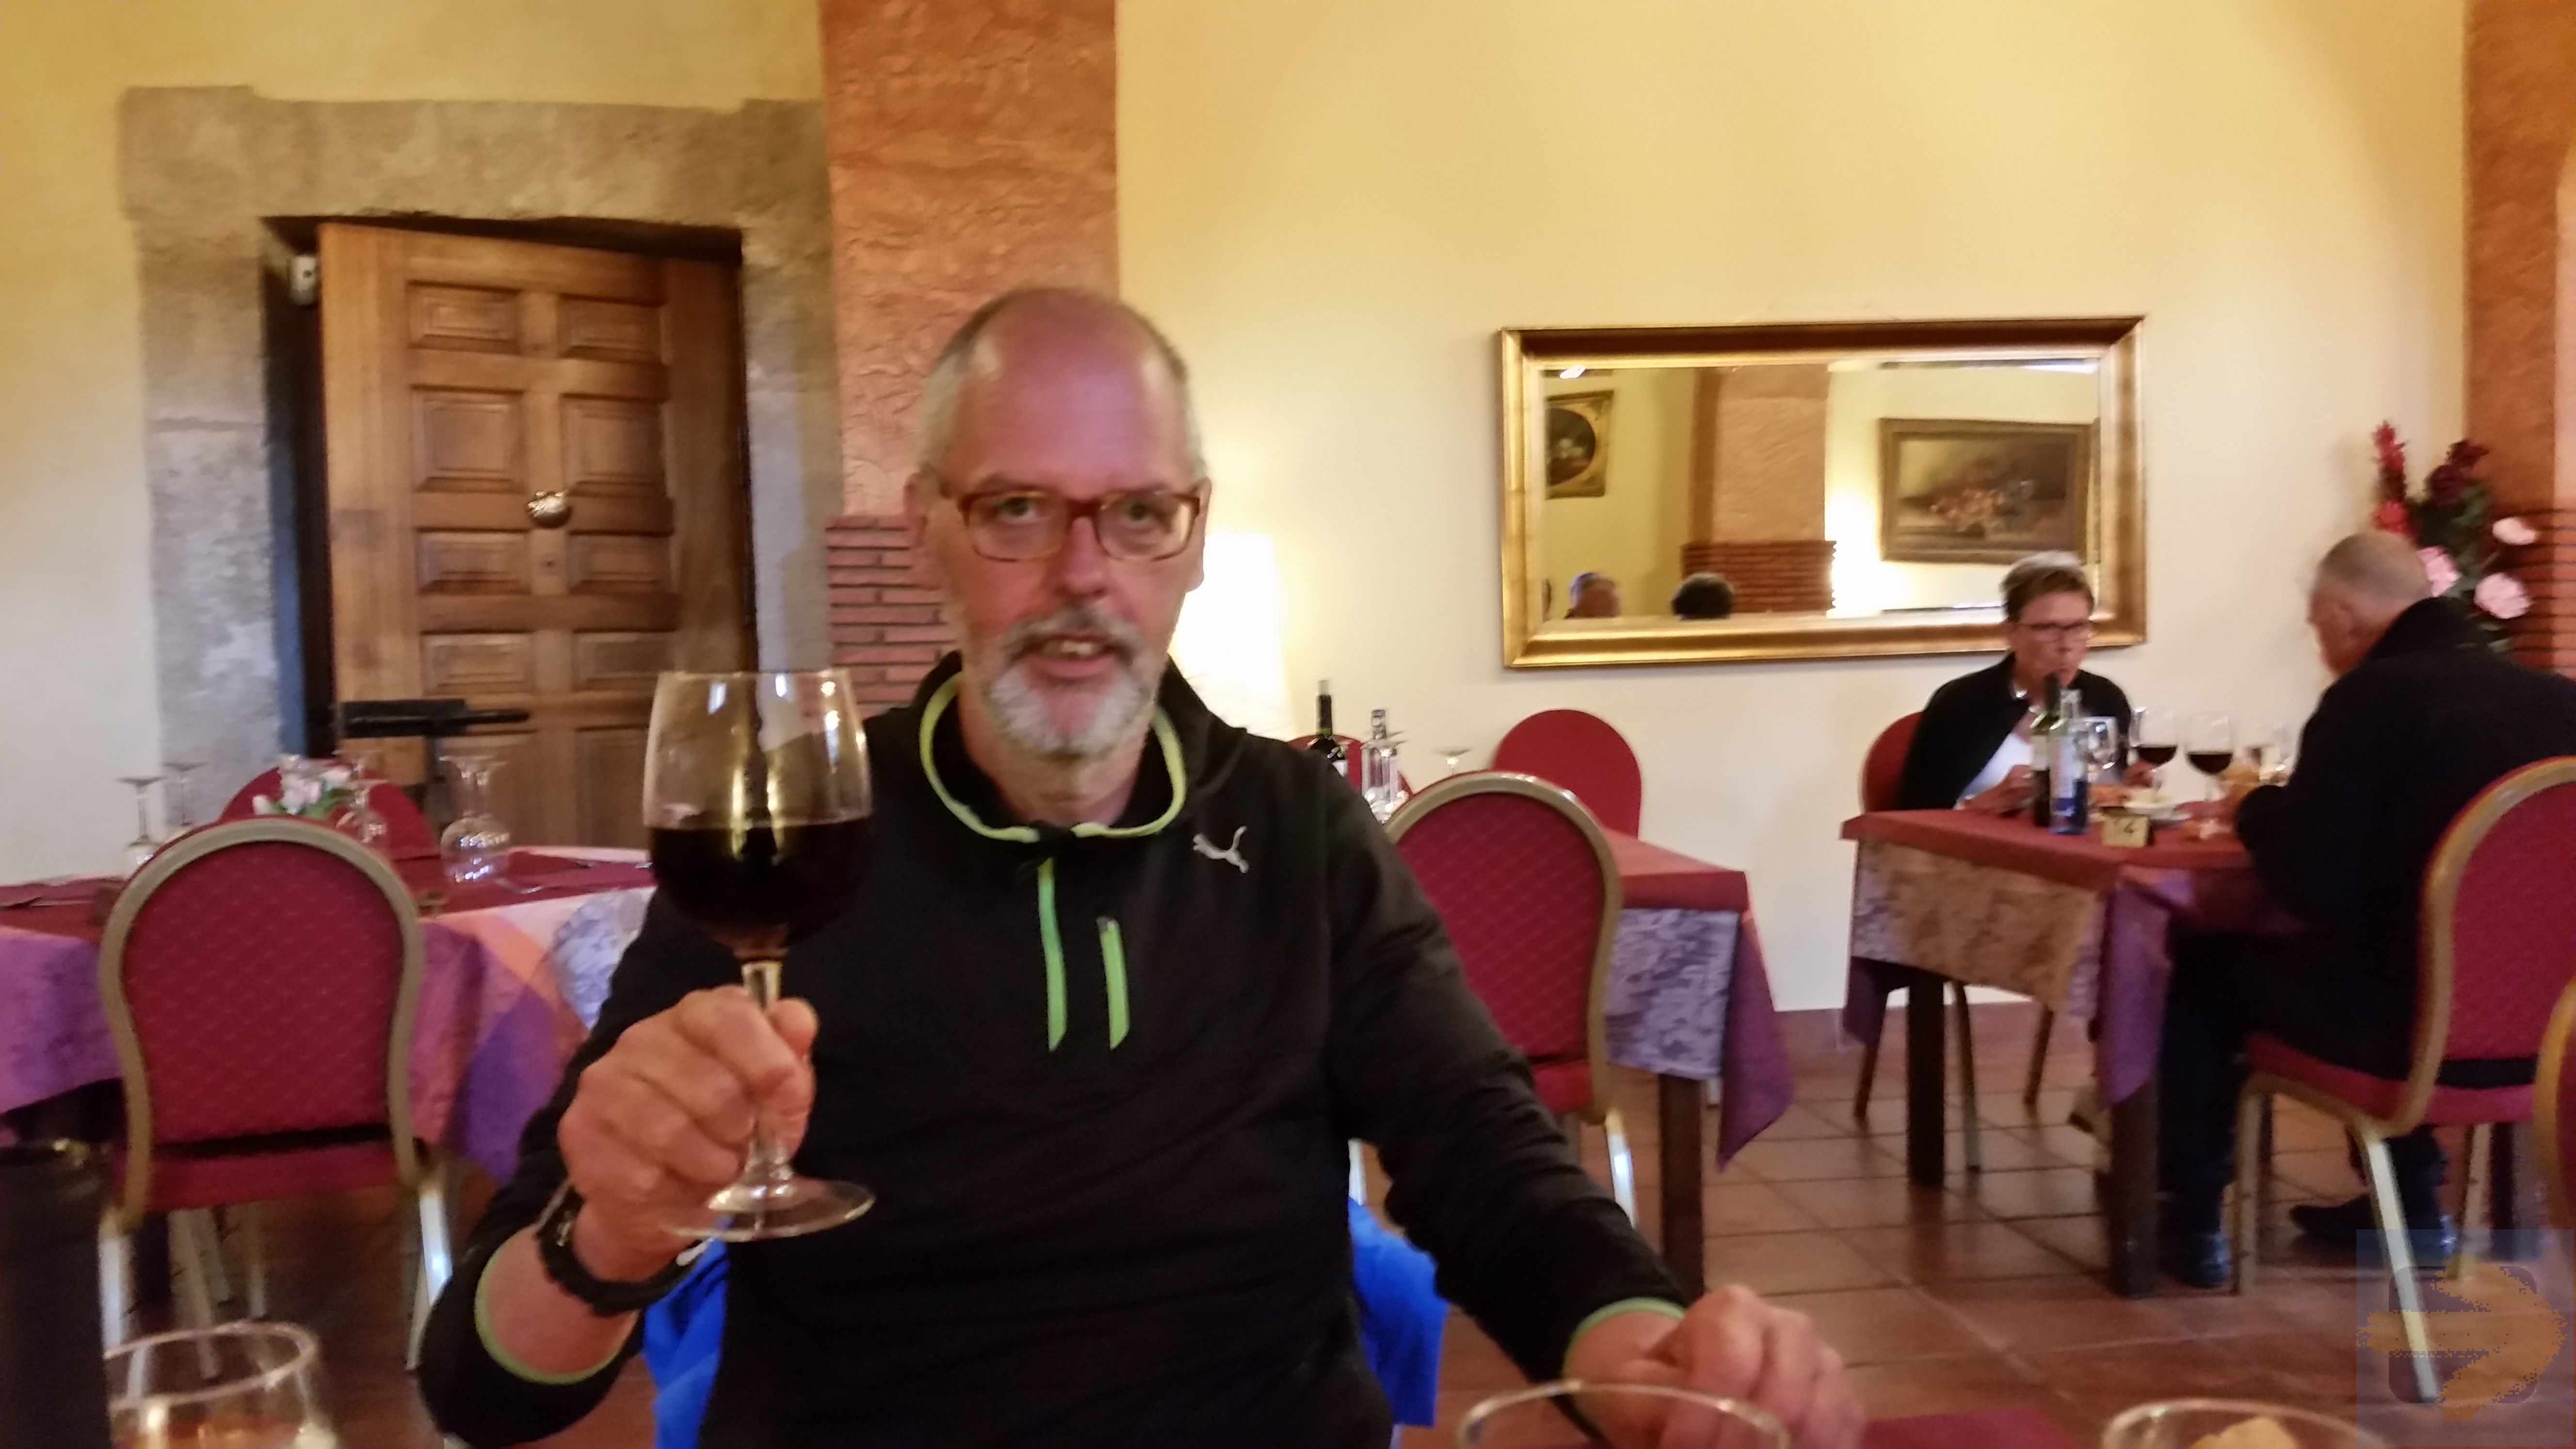 A toast on the next Camino.